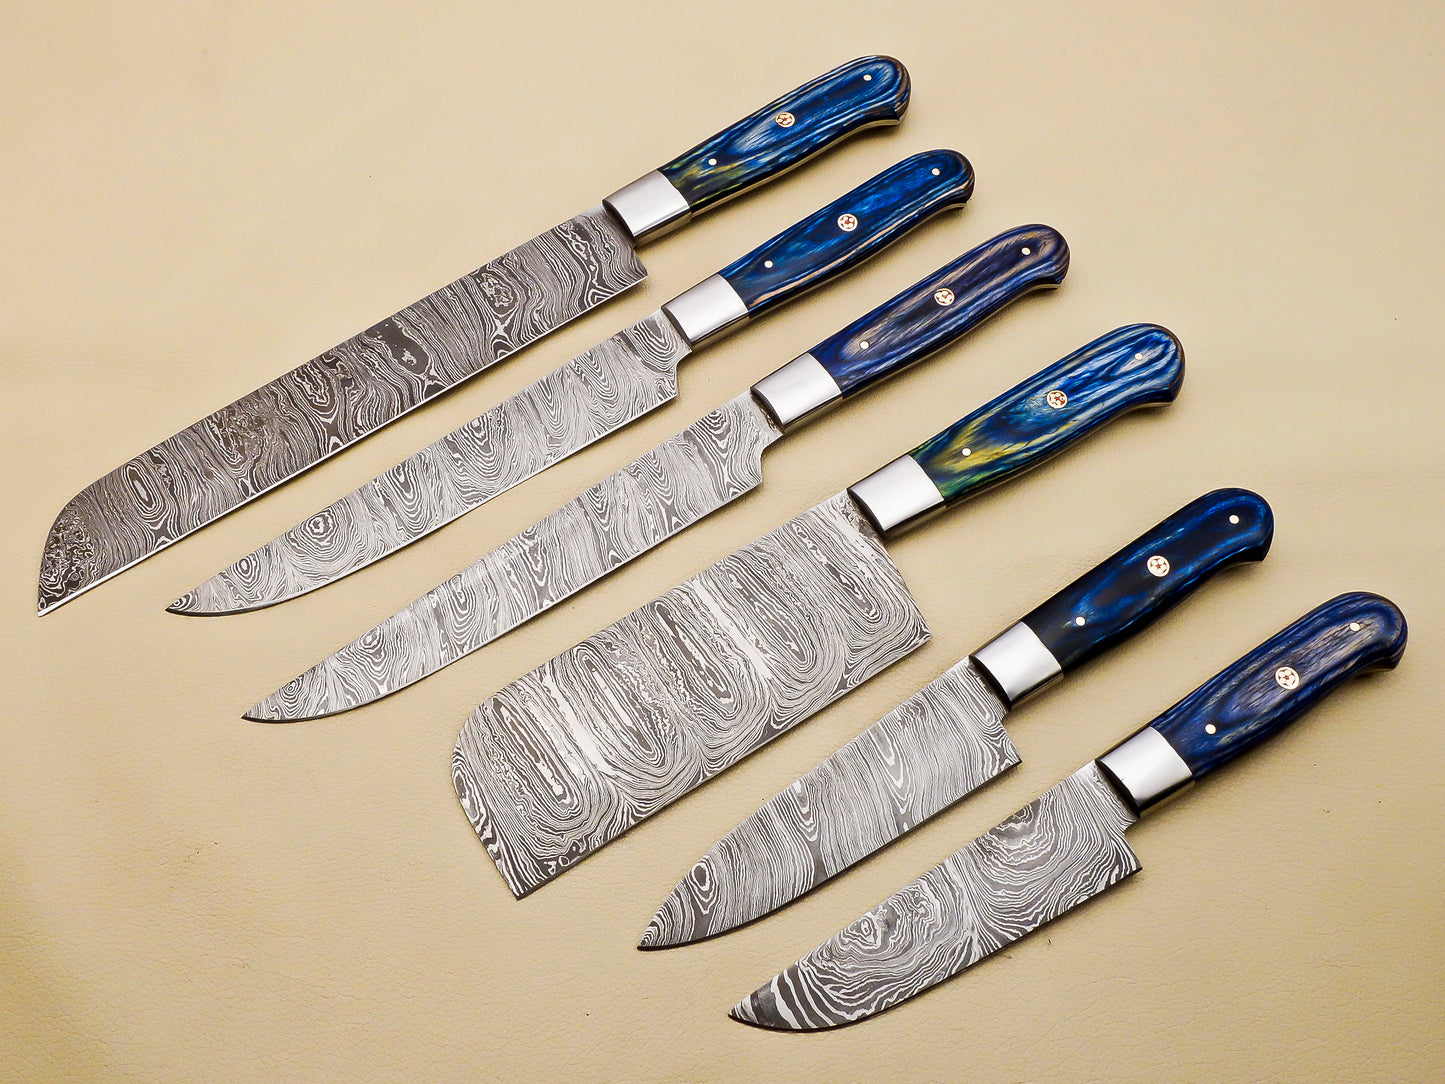 Damascus Steel Kitchen / Chef Knives set